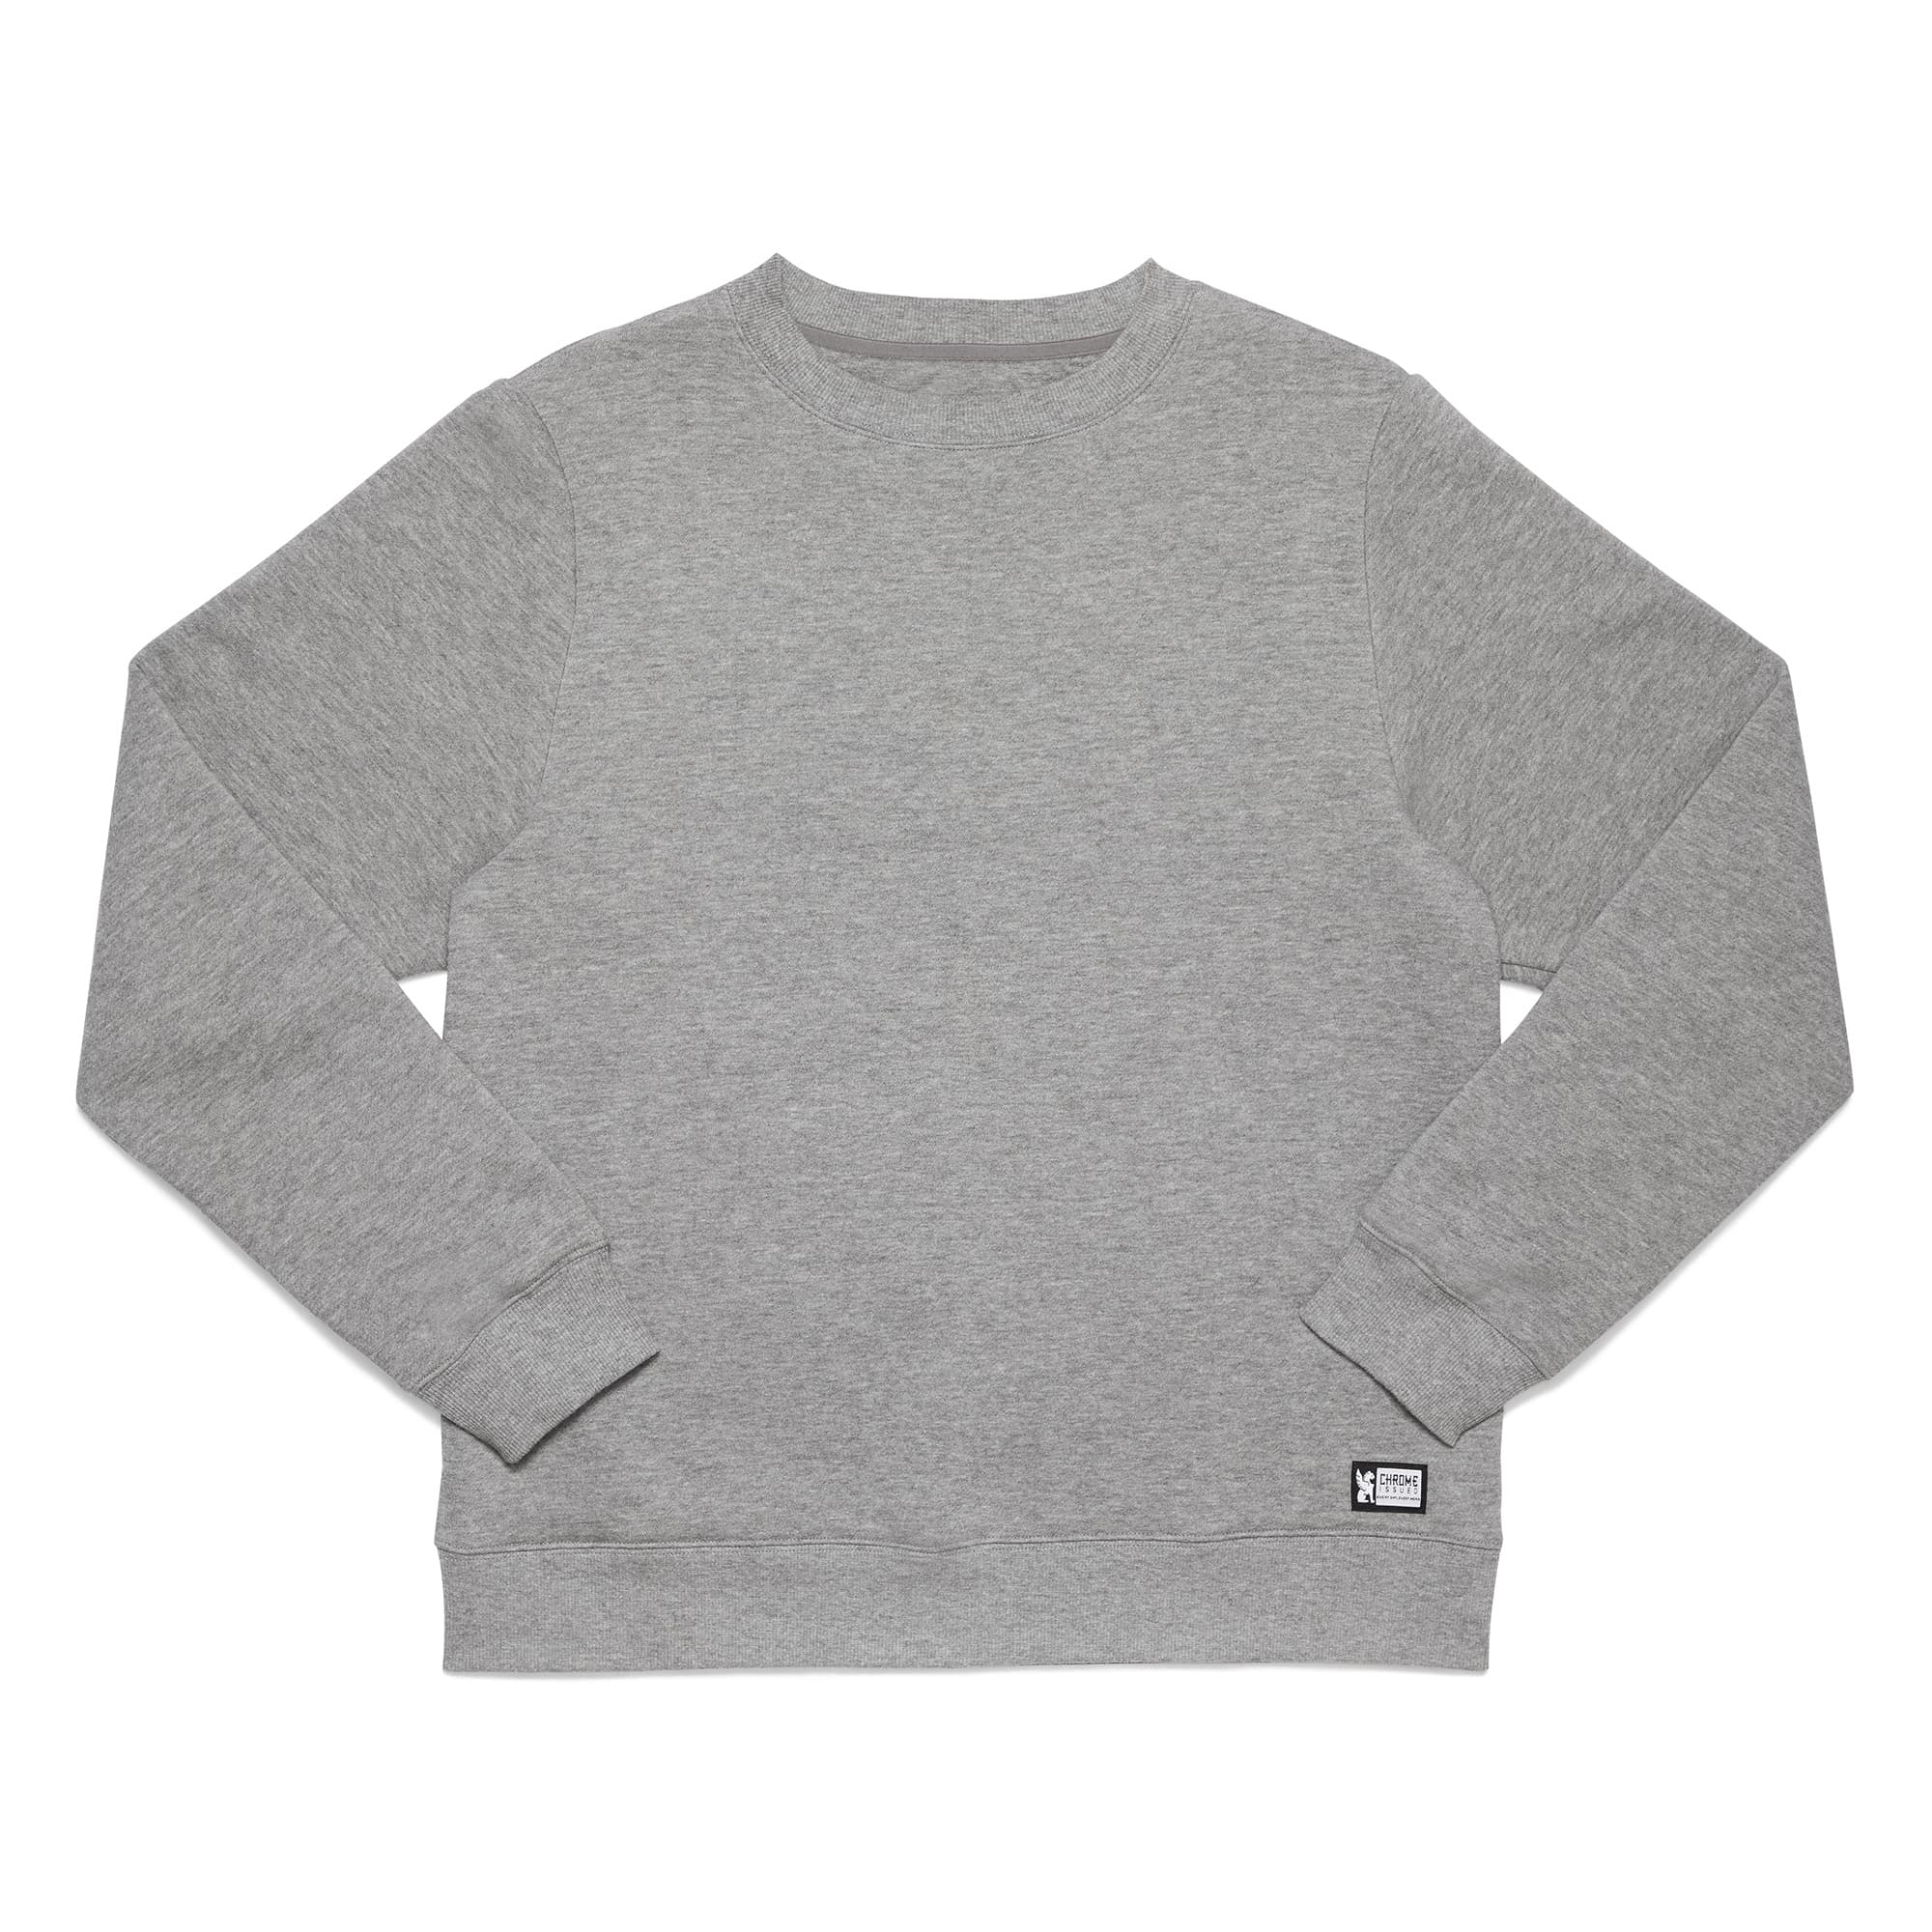 Grey fleece Crewneck Sweatshirt #color_castlerock heather